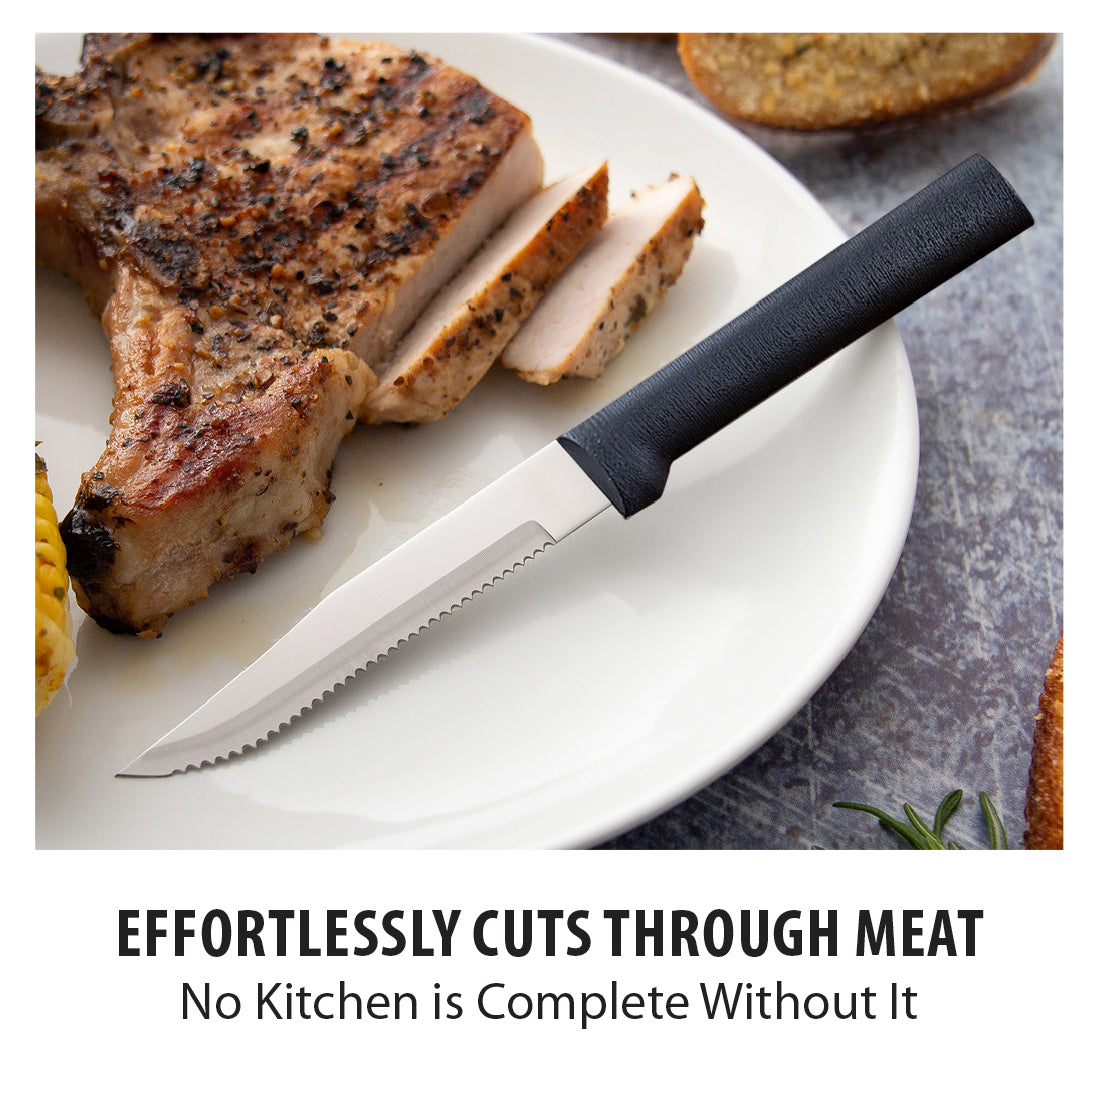 How to Sharpen Steak Knives - Daring Kitchen